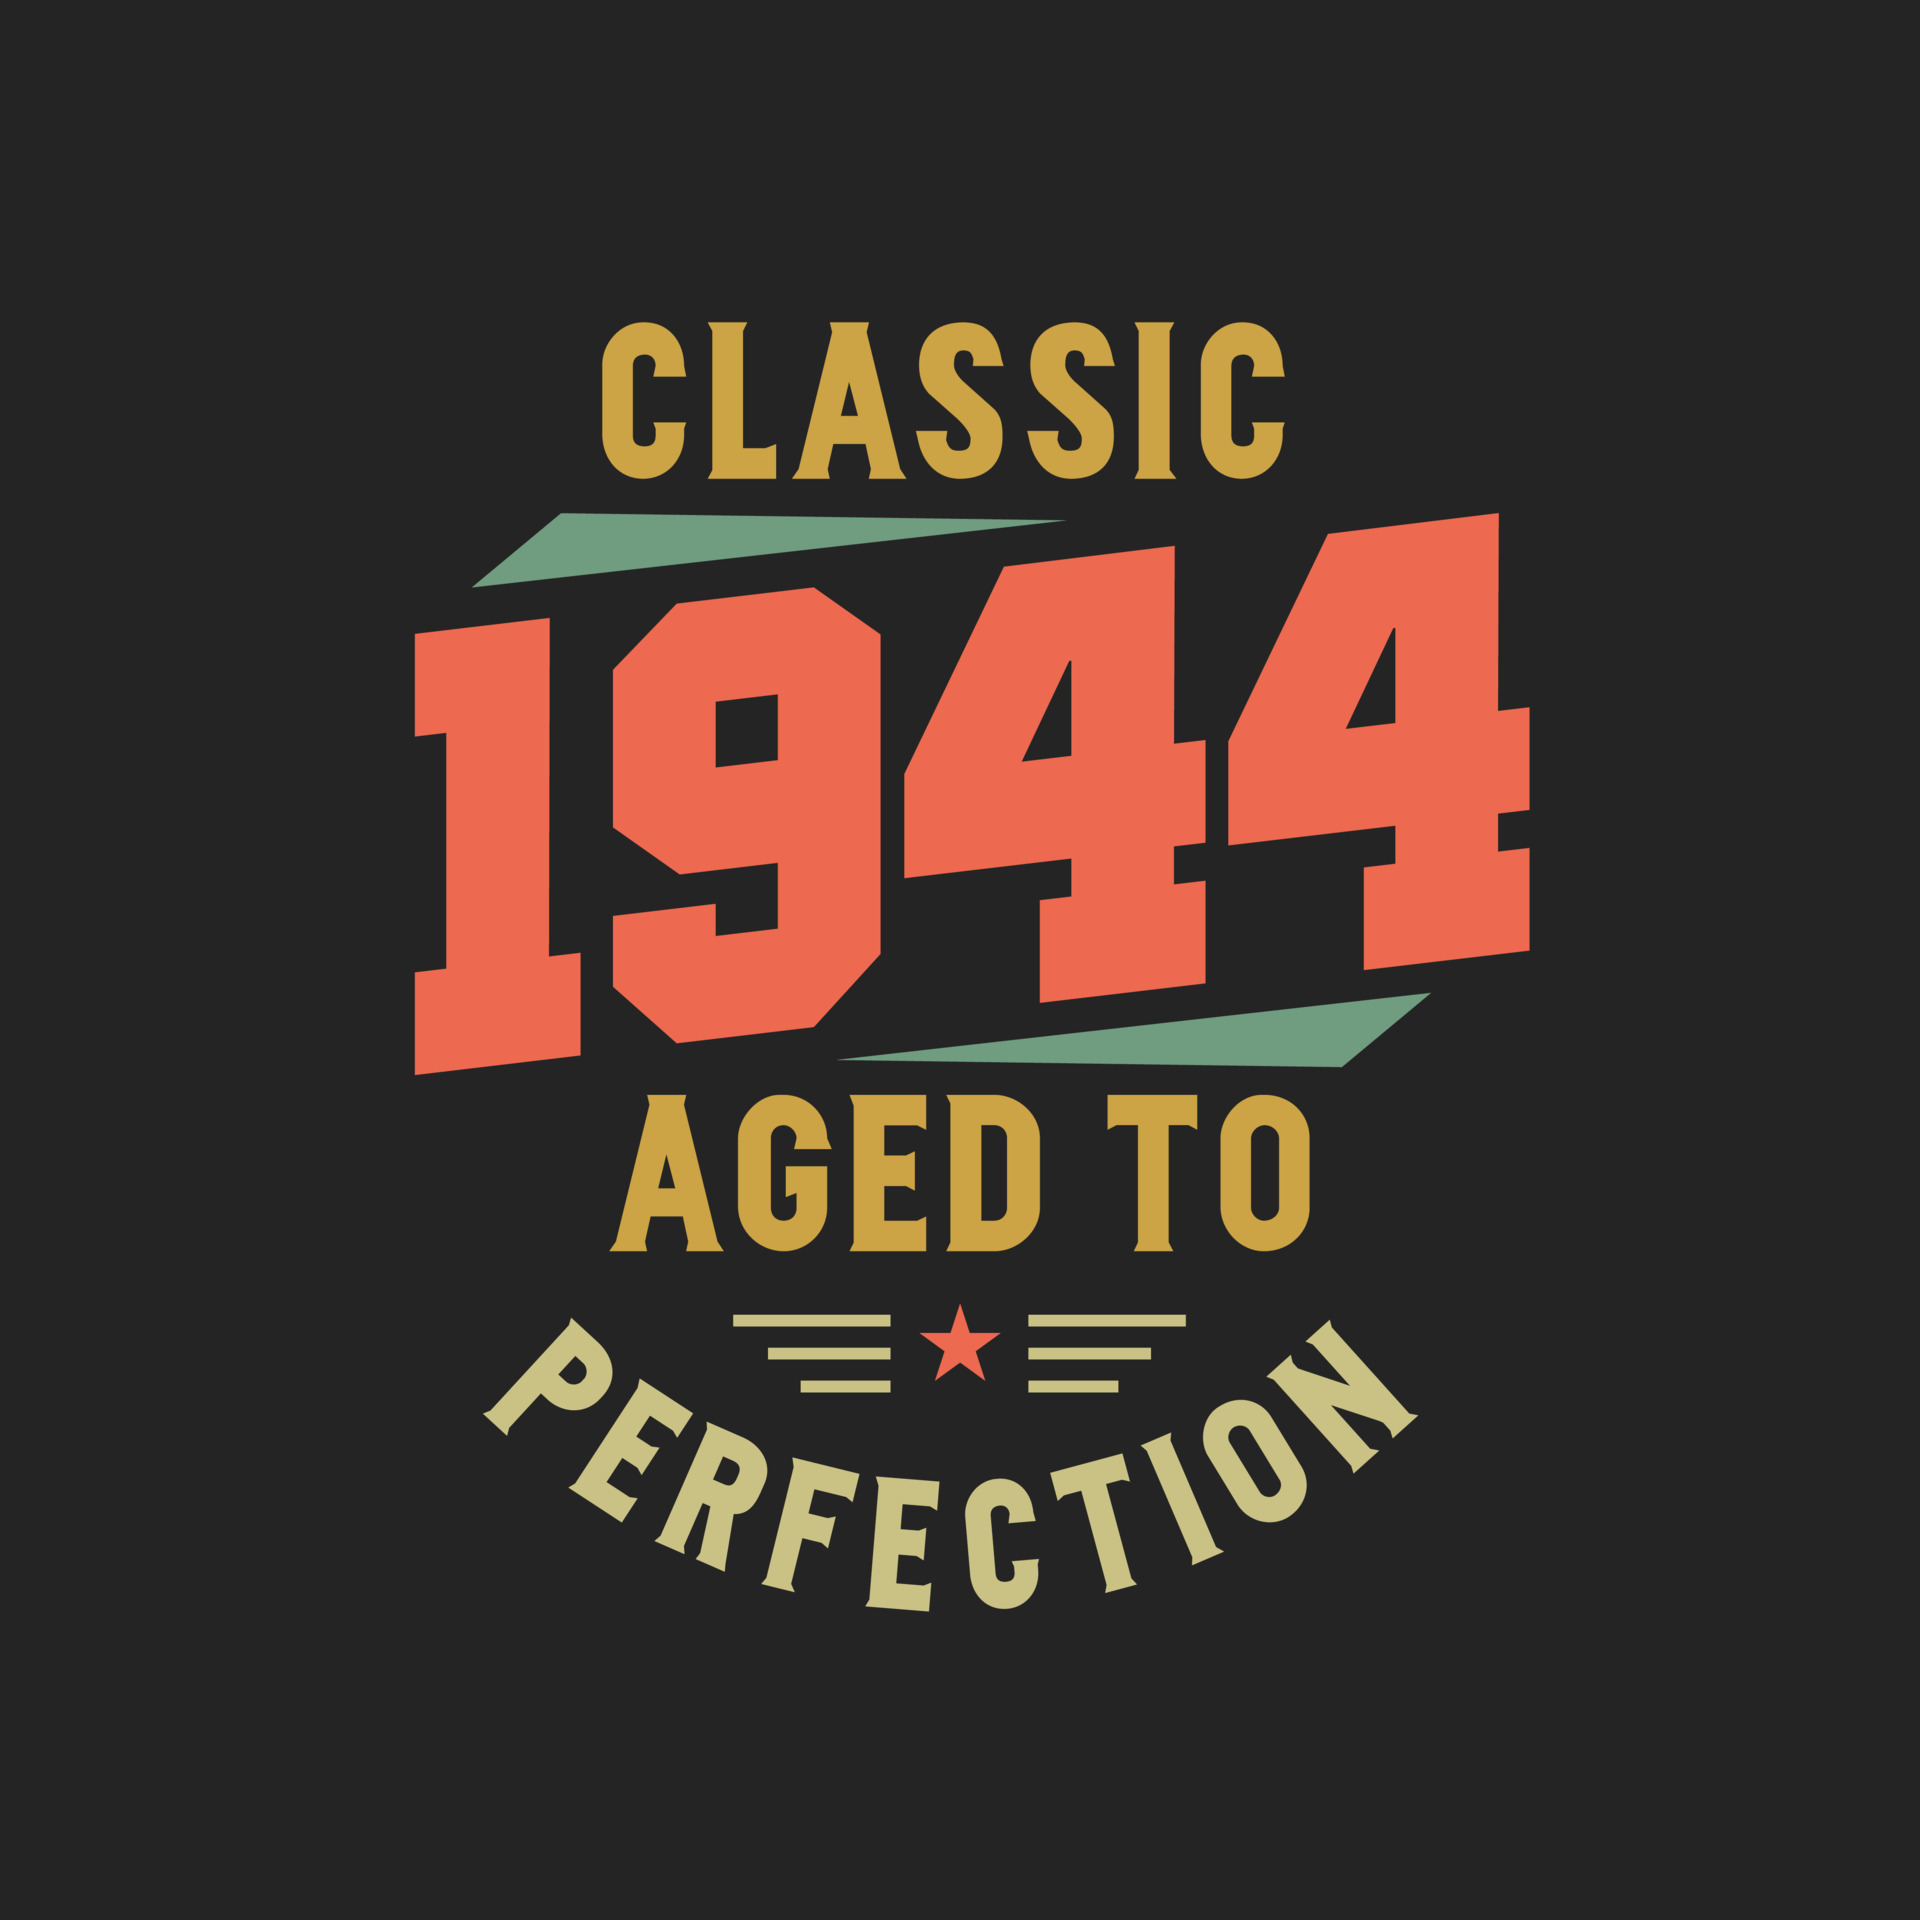 Classic 1944 The Legends. 1944 Vintage Retro Birthday 9676183 Vector ...